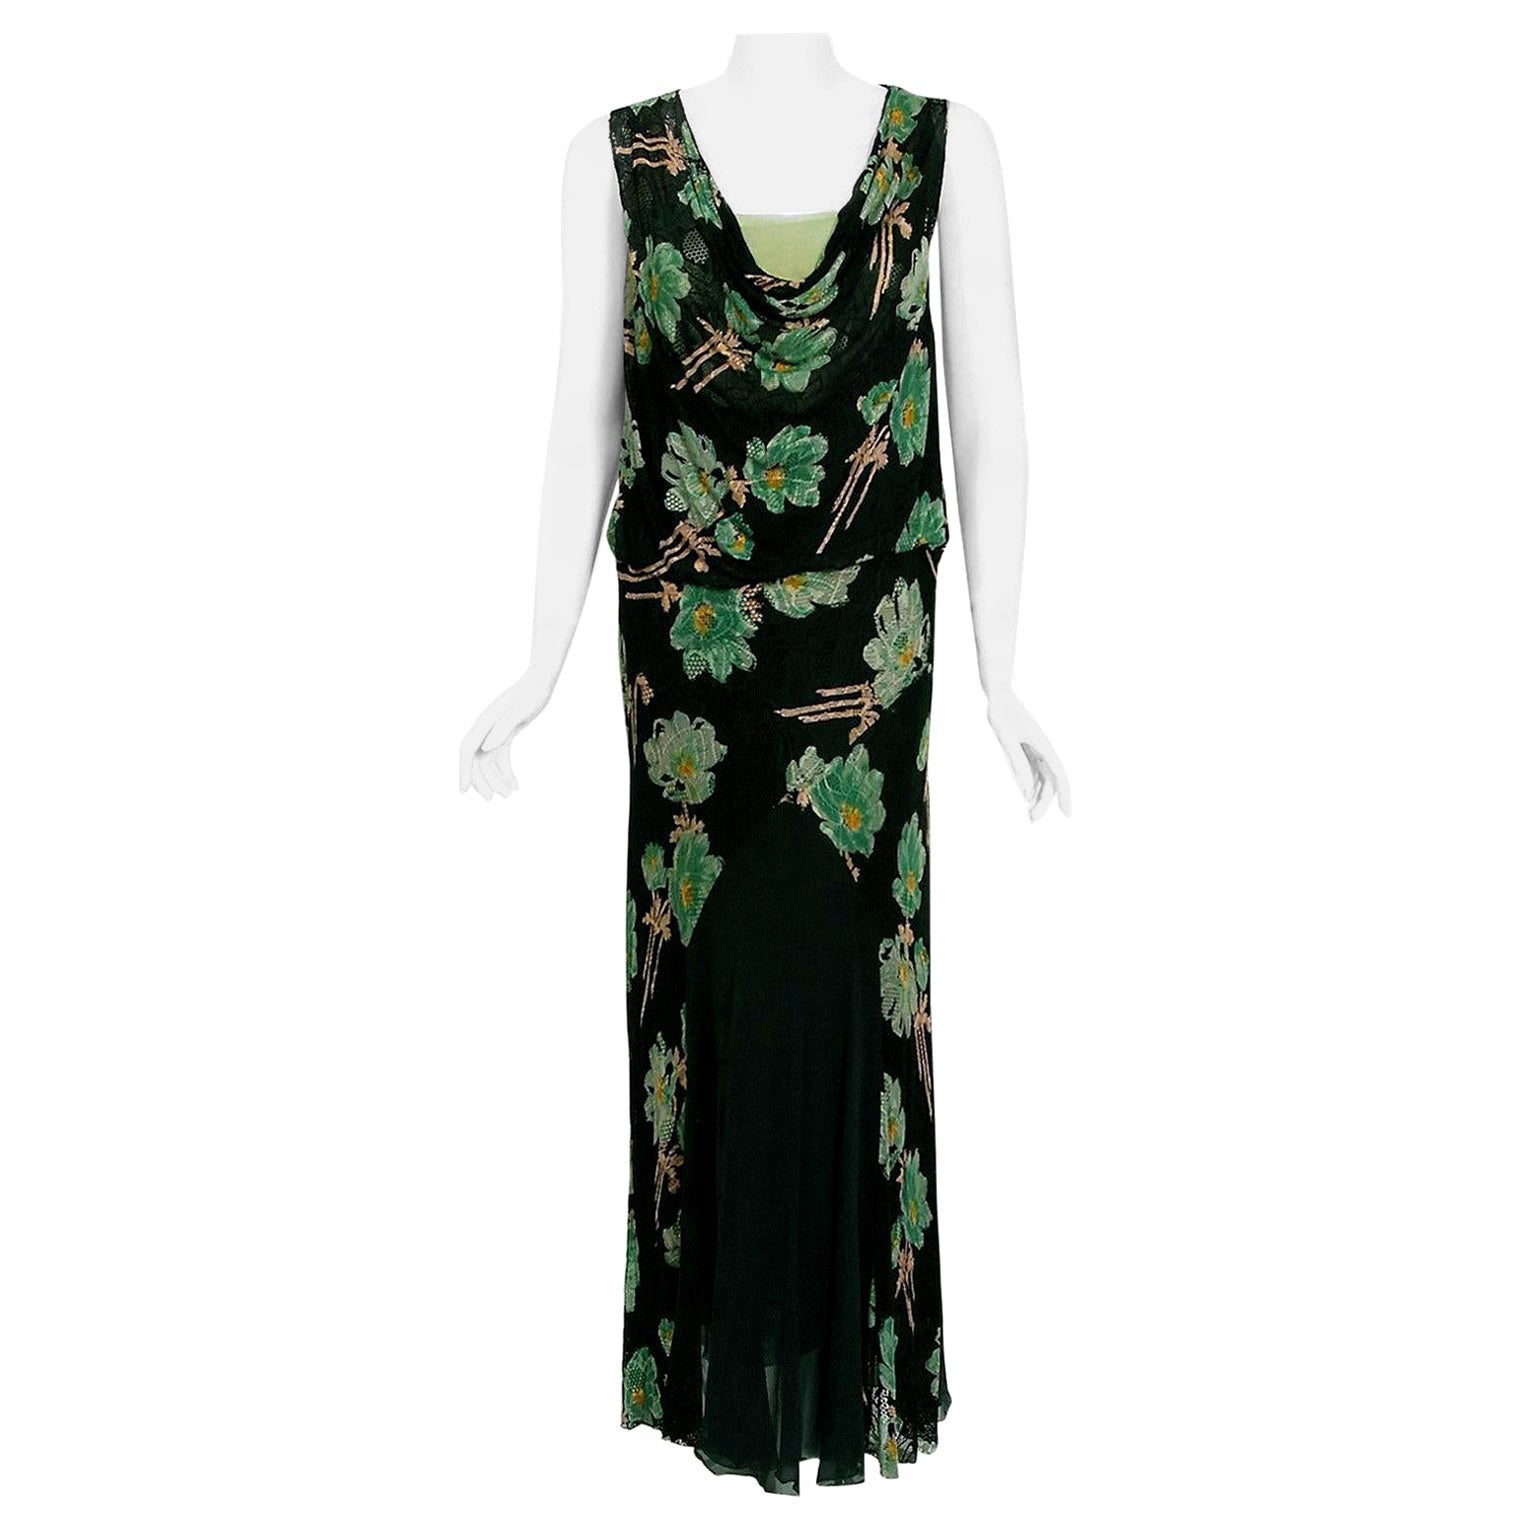 Vintage 1930's Green Black Floral Sheer Lace & Chiffon Bias-Cut Gown w/ Jacket